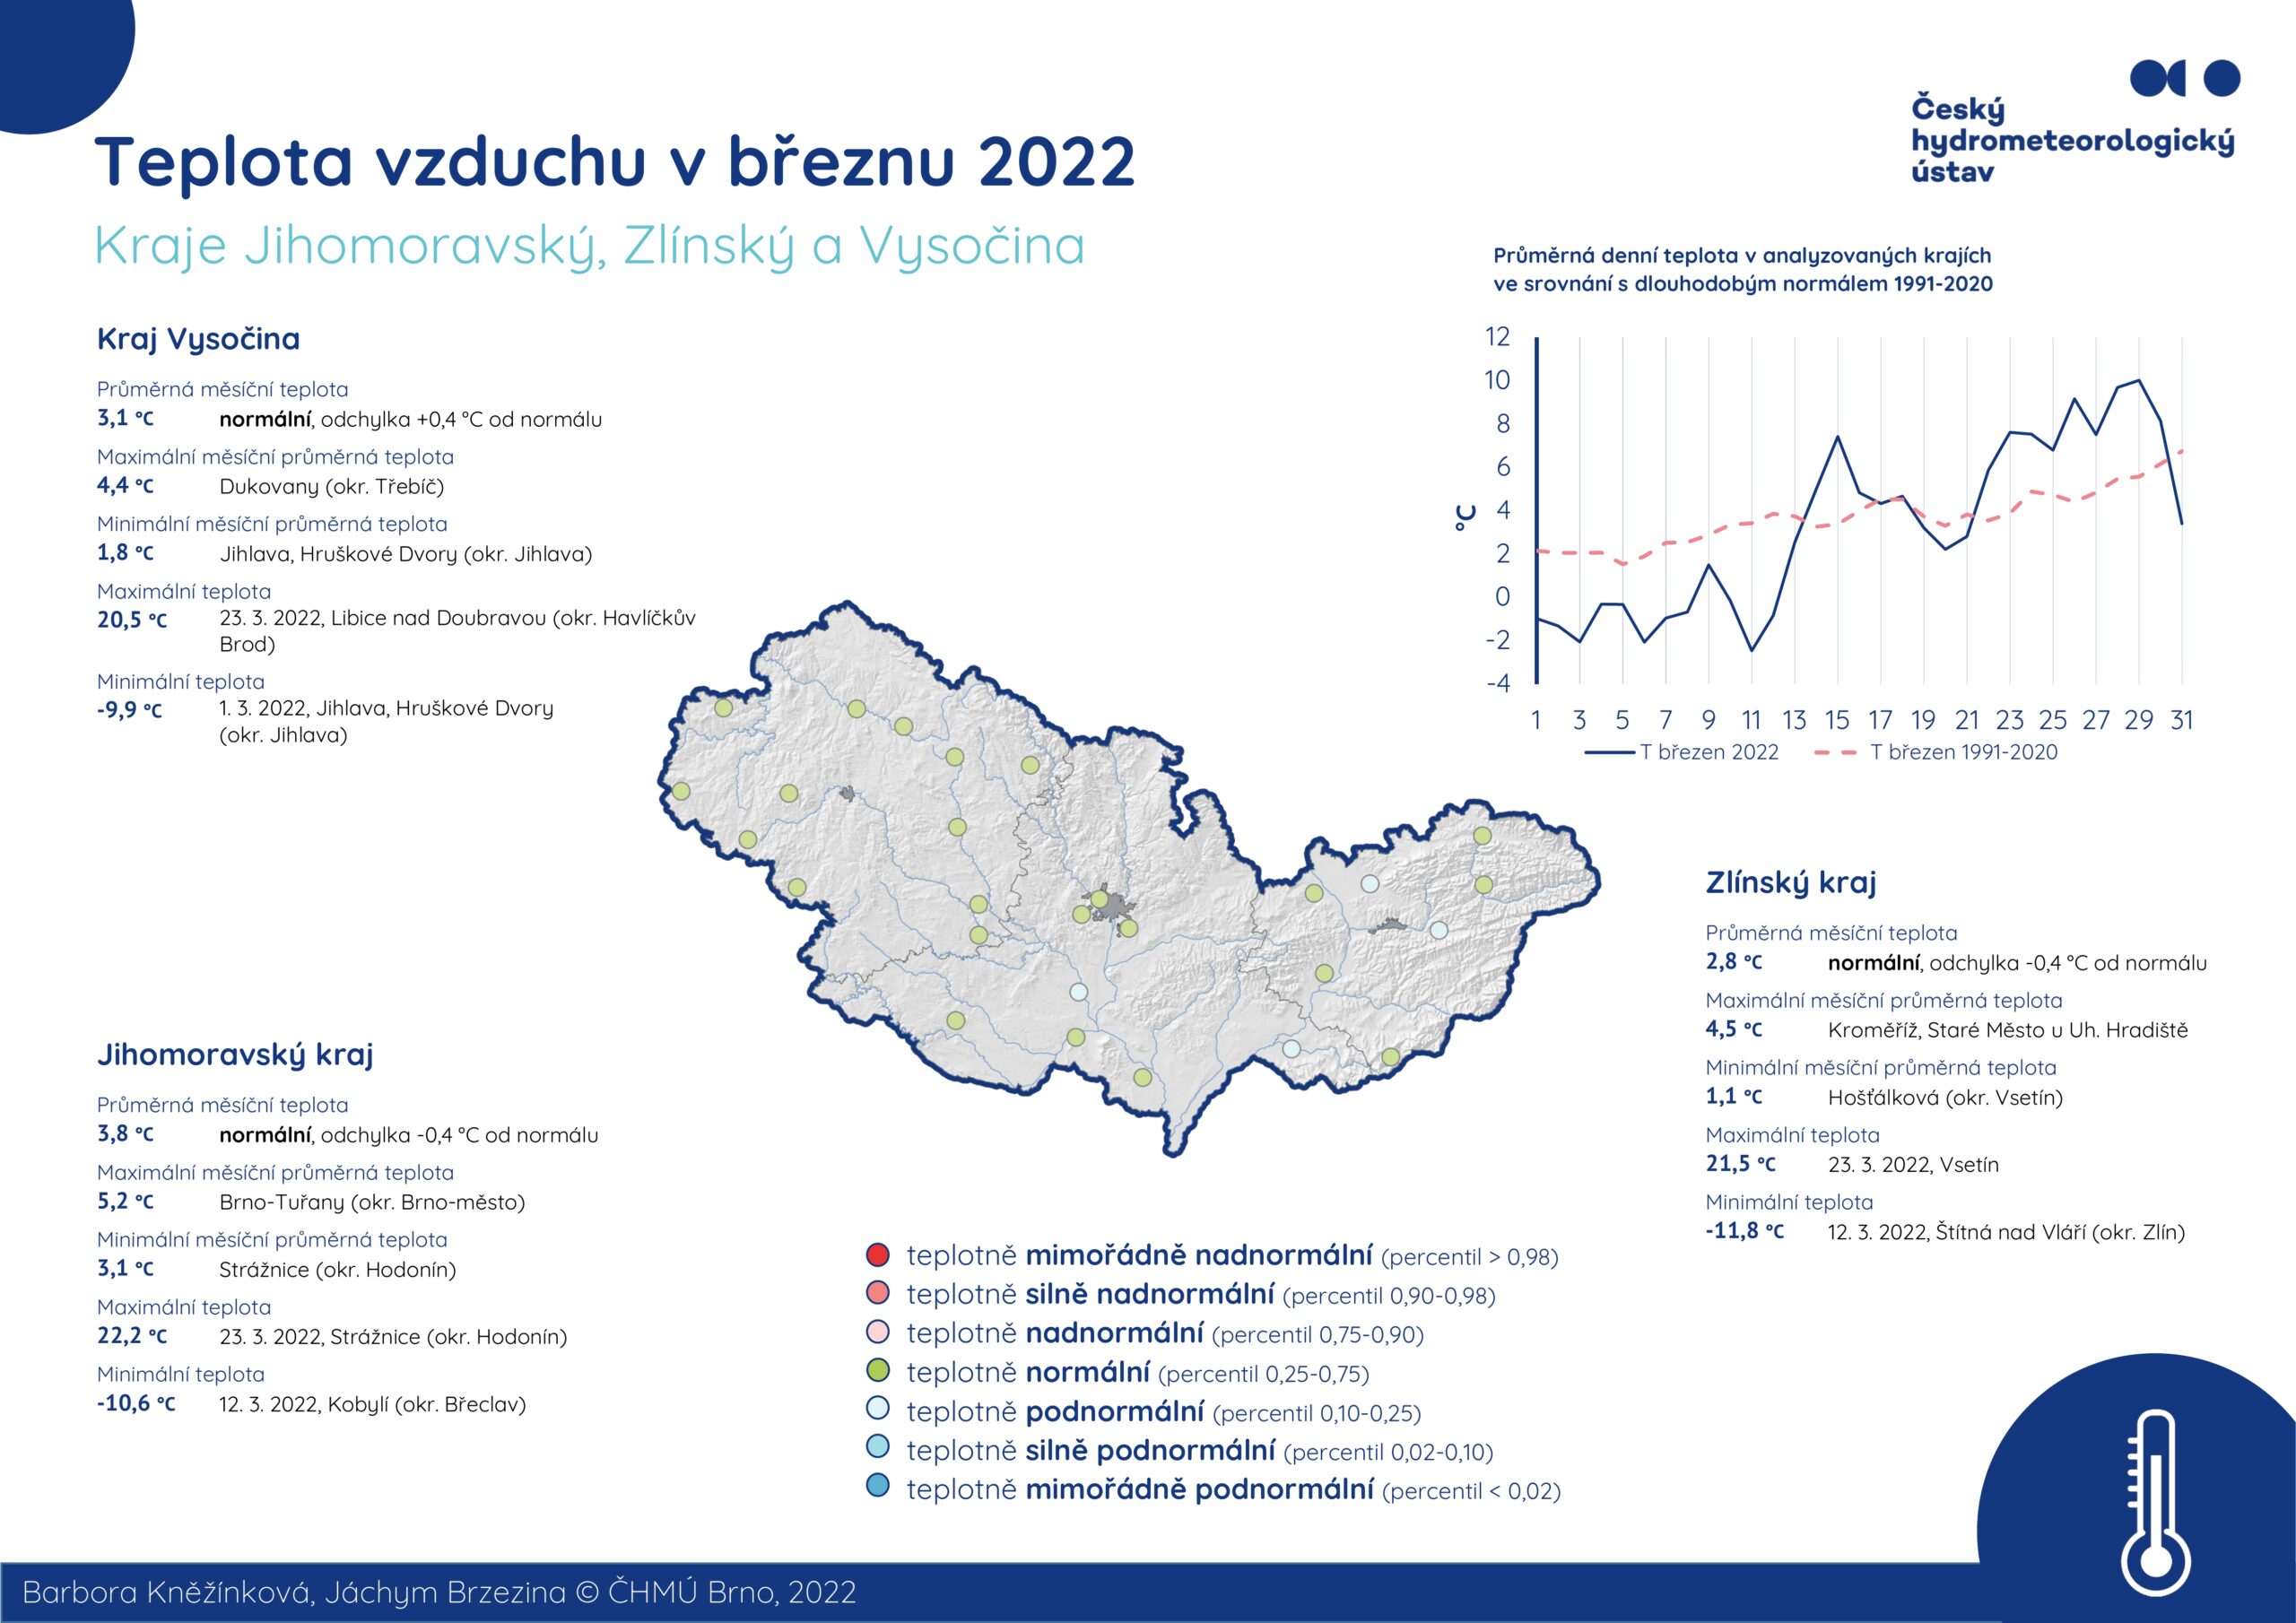 Teplota vzduchu v březnu 2022 – Jihomoravský kraj, Zlínský kraj a Kraj Vysočina1 min čtení